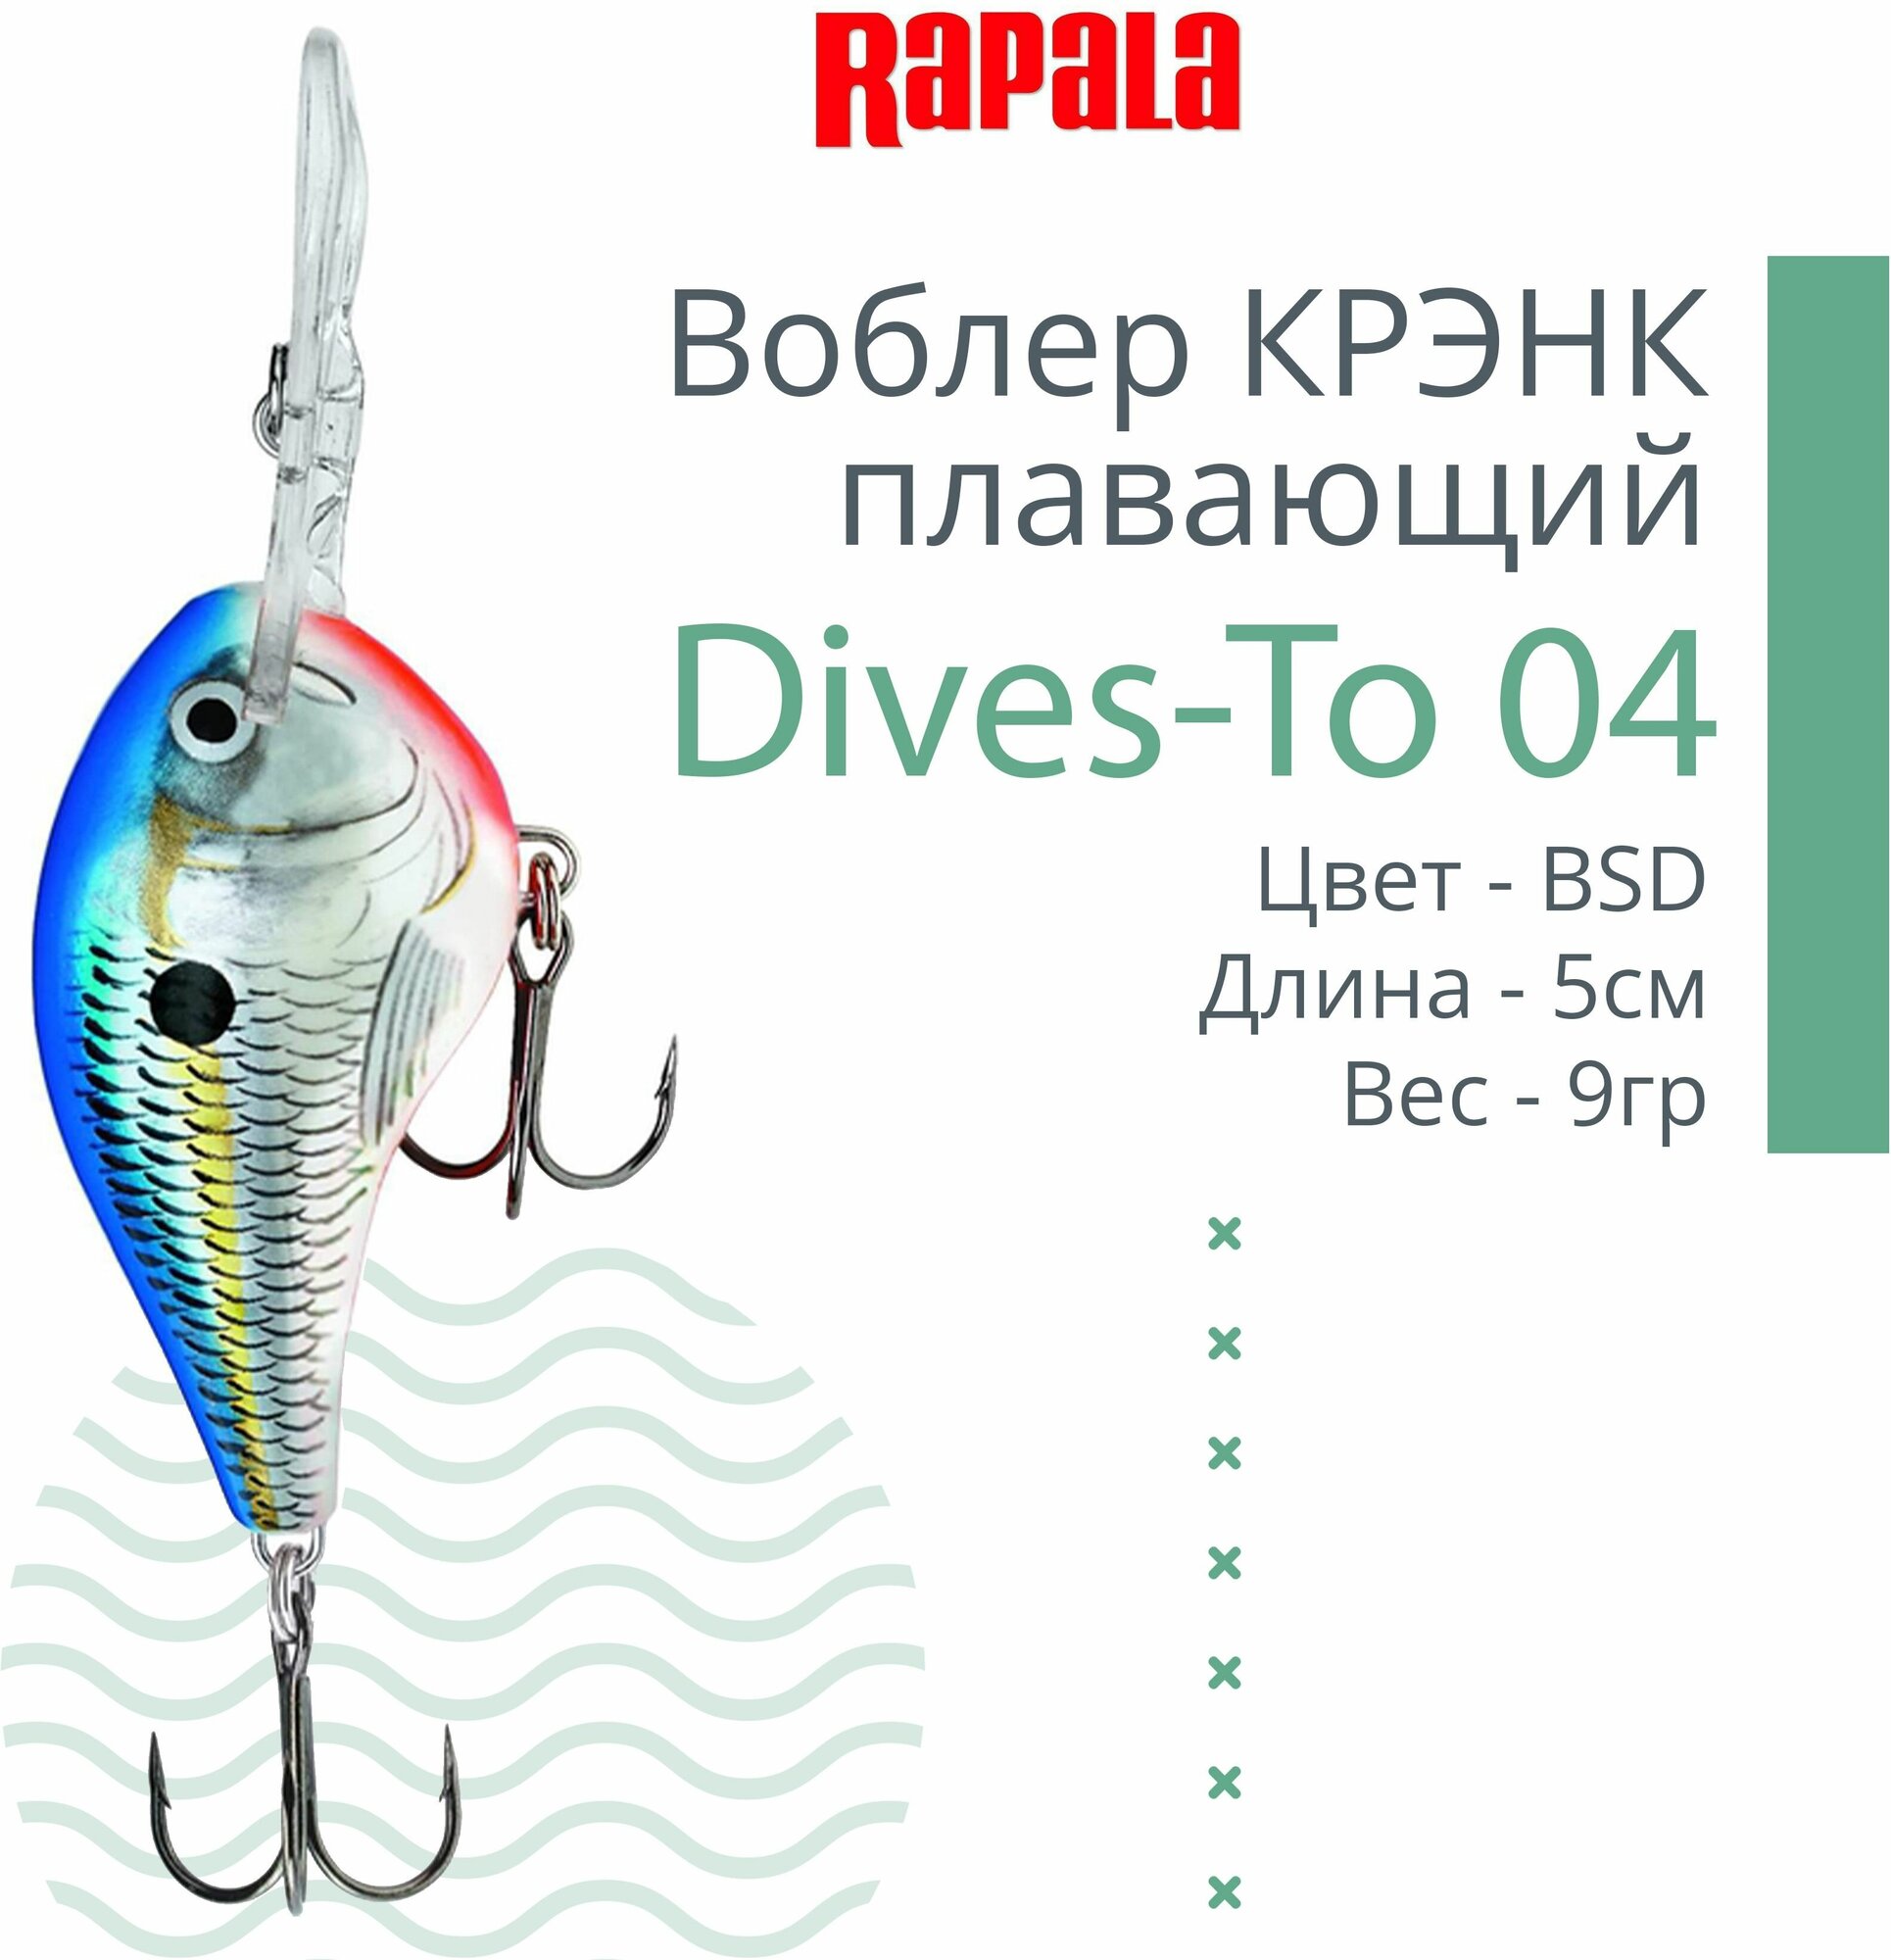 Воблер для рыбалки RAPALA Dives-To 04, 5см, 9гр, цвет BSD , плавающий